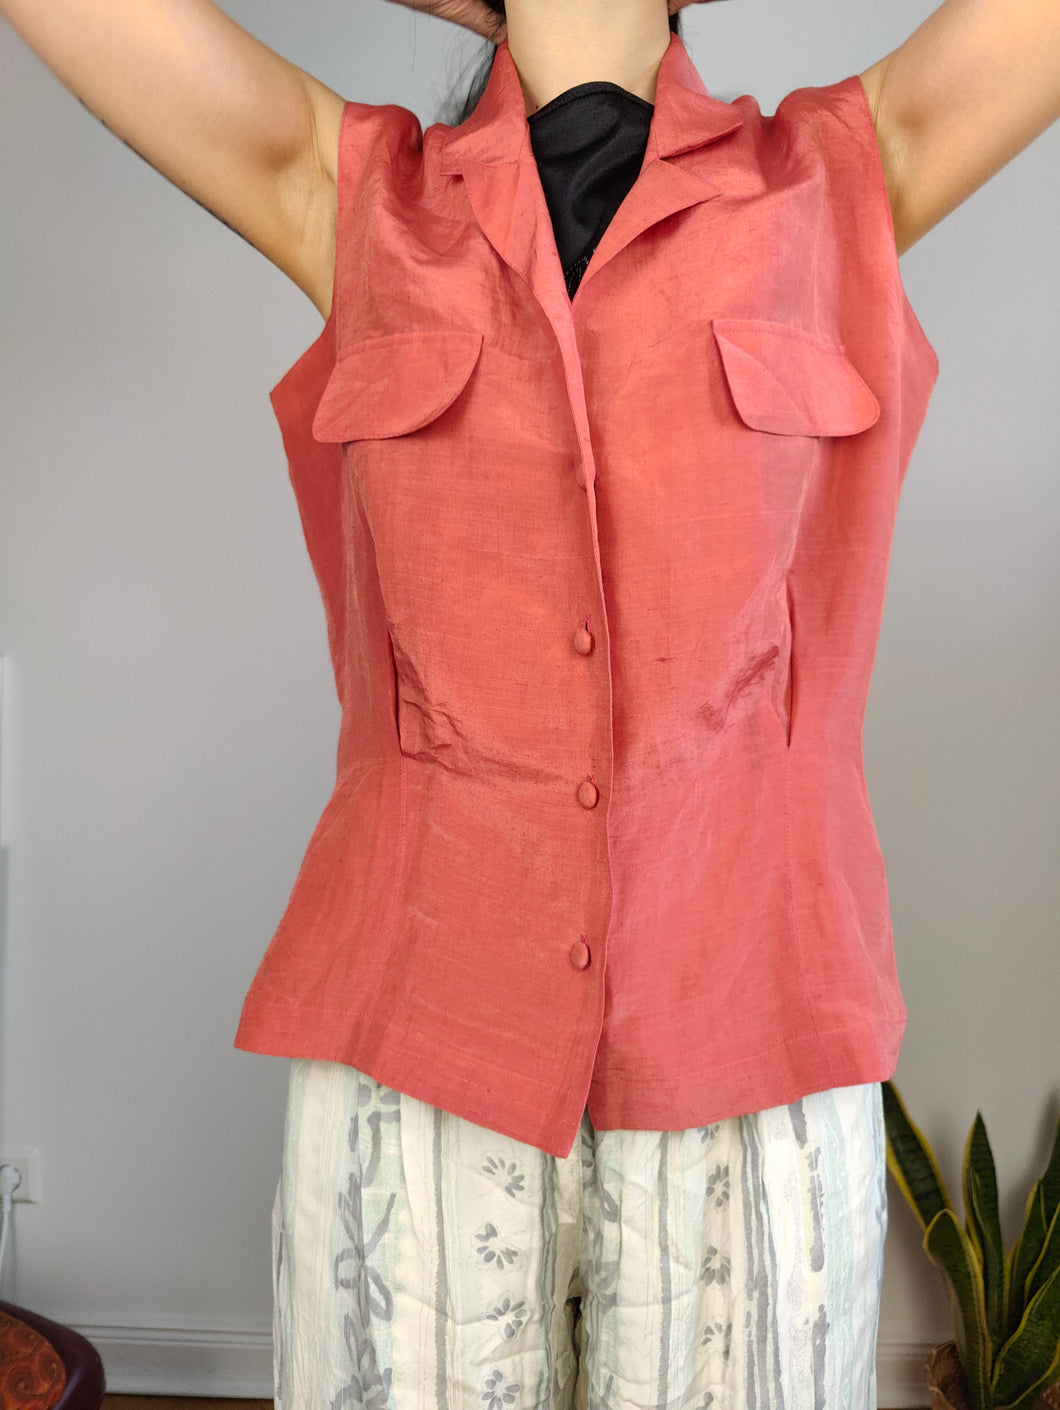 Vintage Laurent sleeveless blouse coral orange pink top button up shirt summer women 44 M